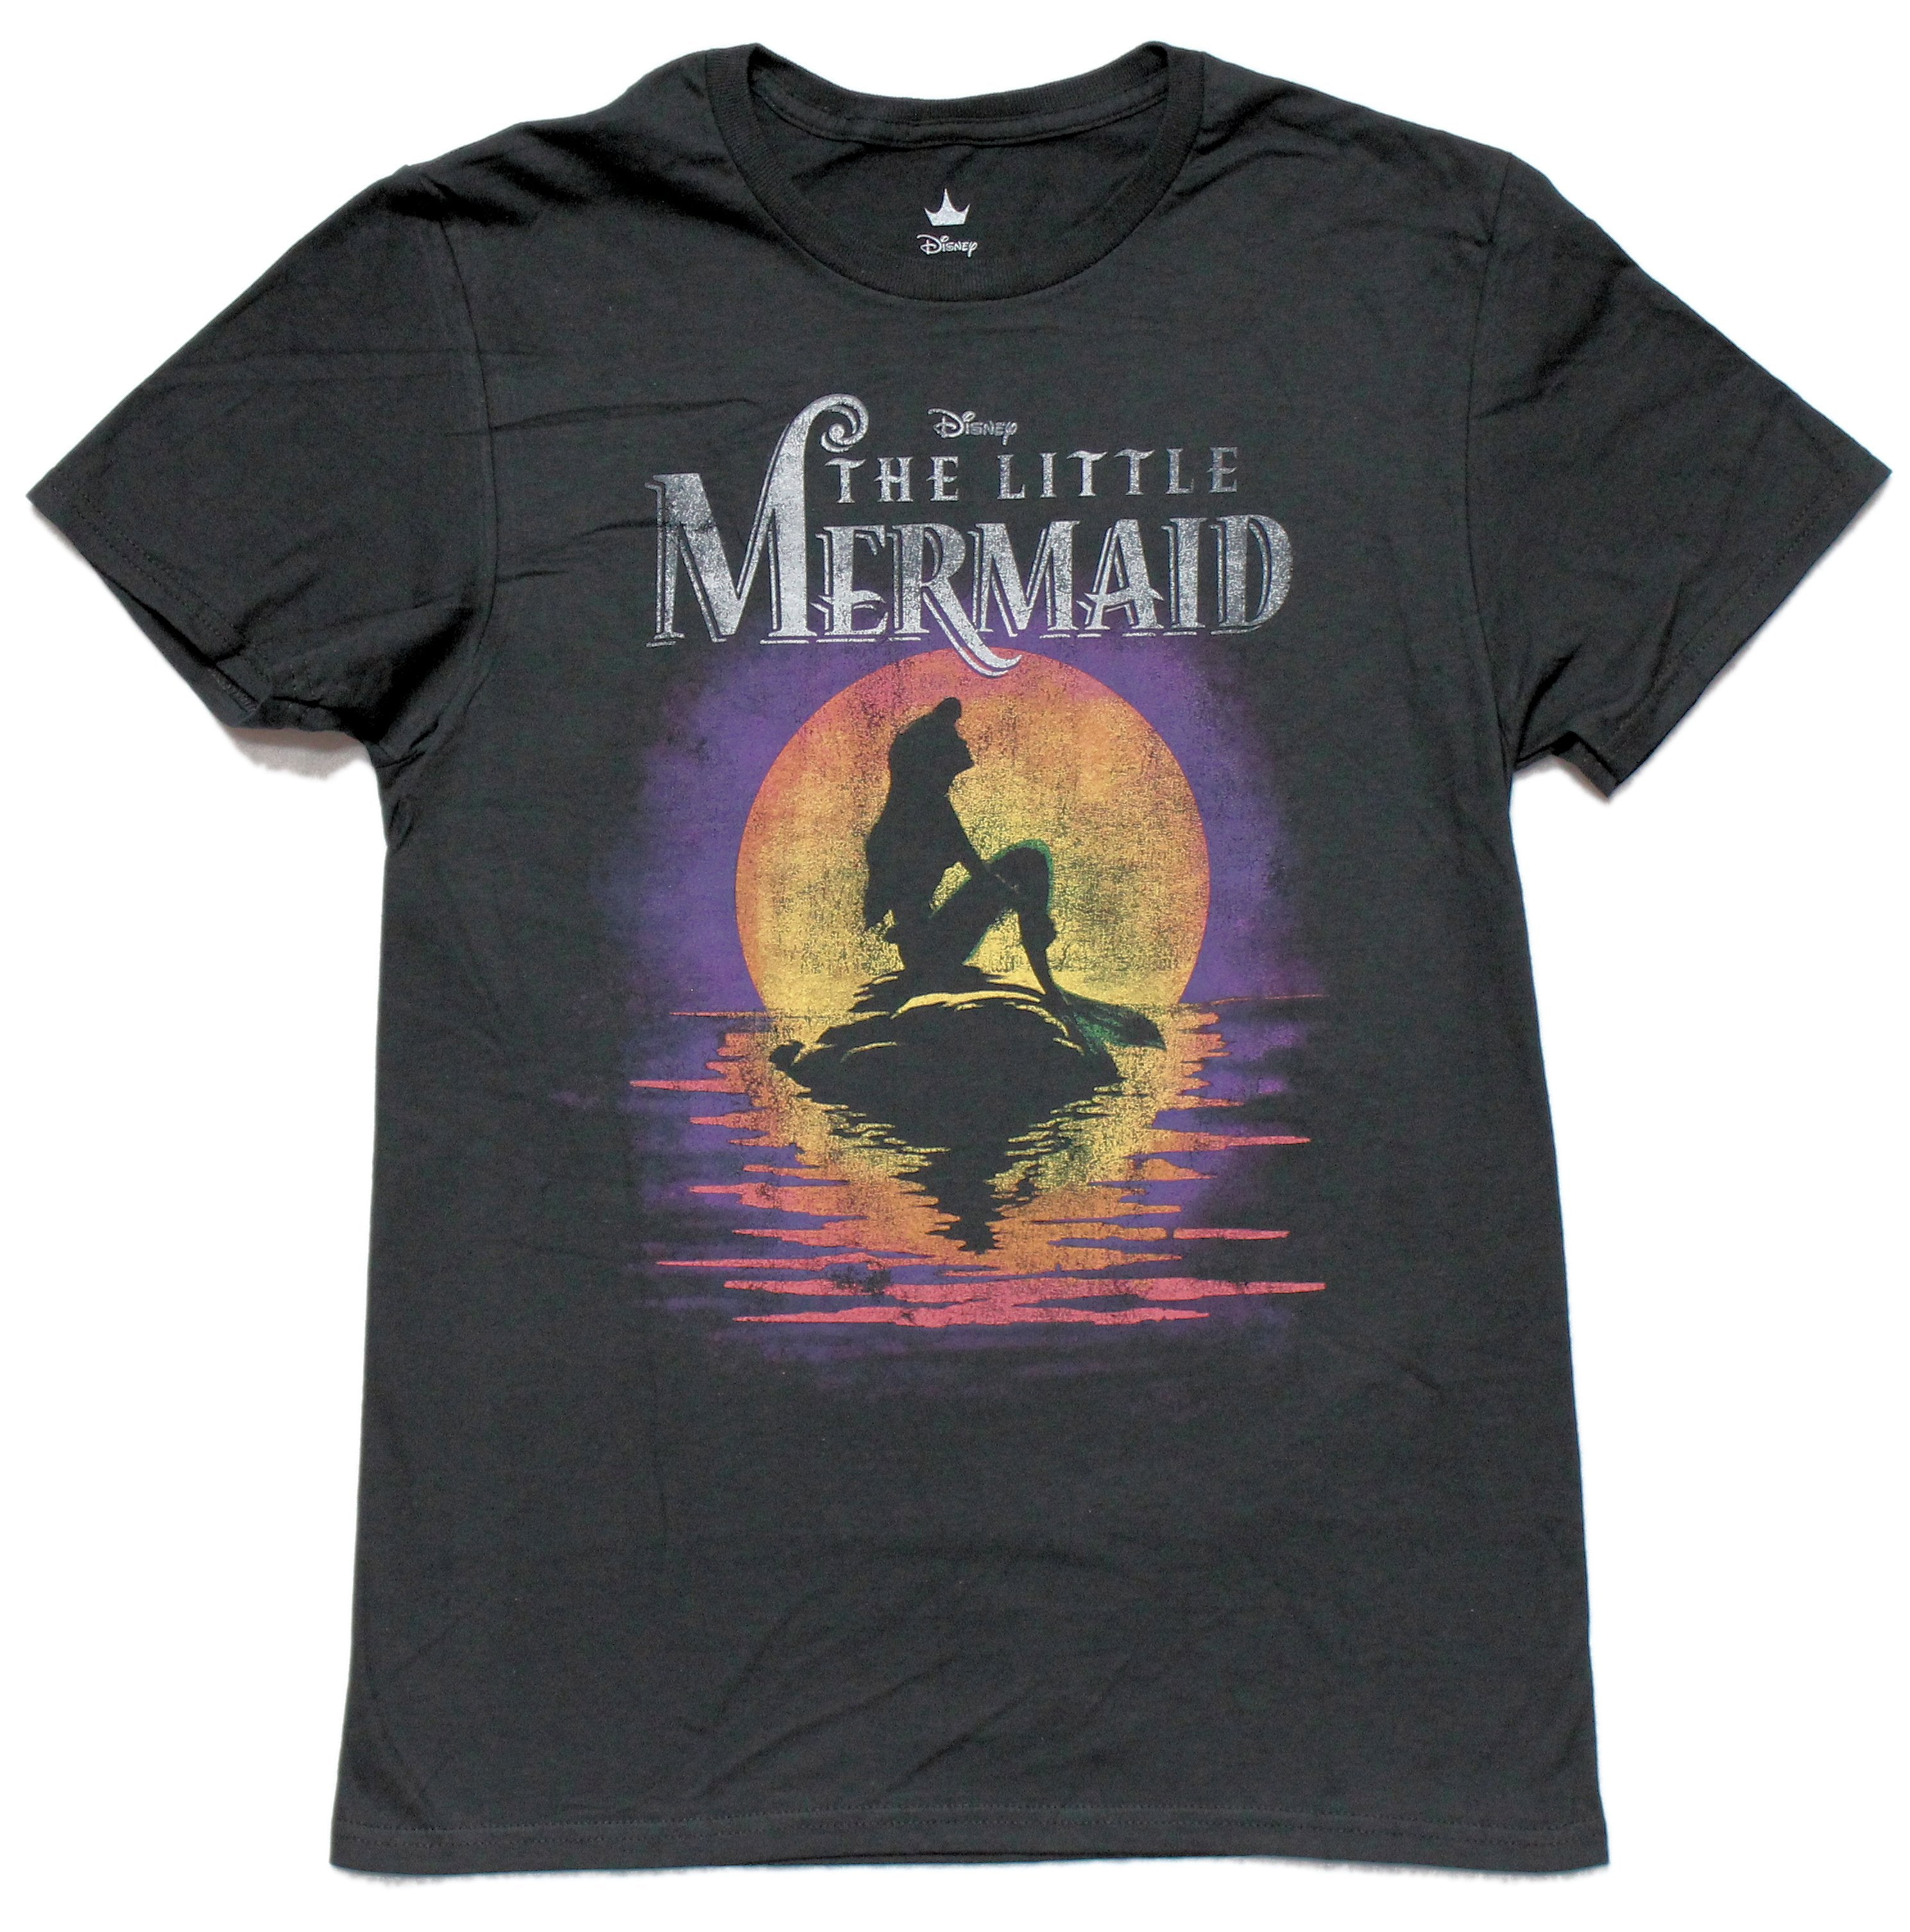 Disney's The Little Mermaid Mens T-Shirt -Distressed Silhouette